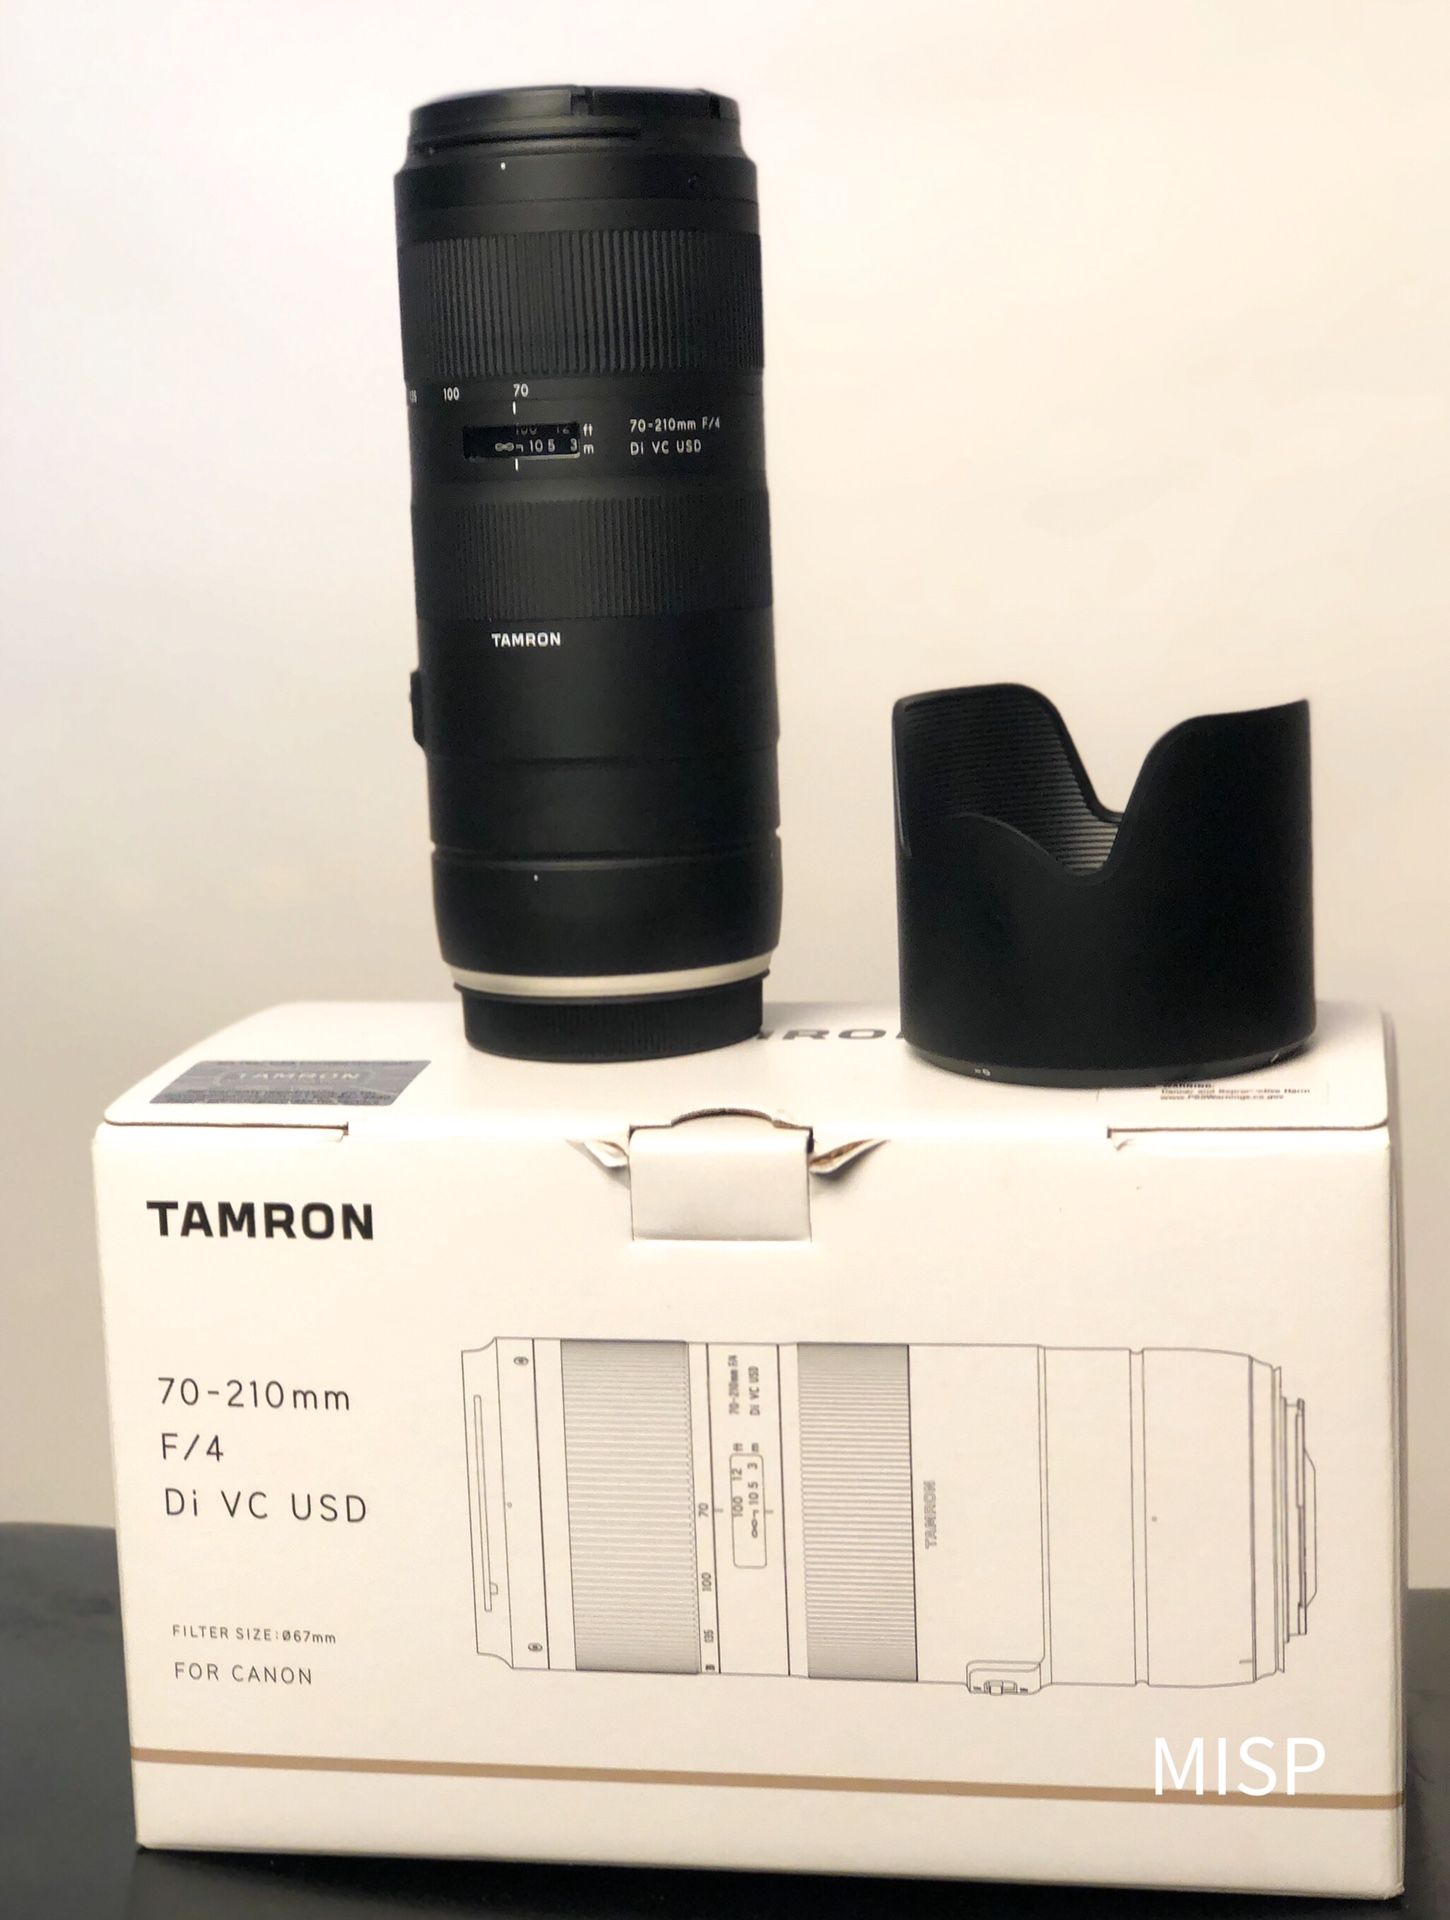 Tamron lens 70-210 f/4 for canon